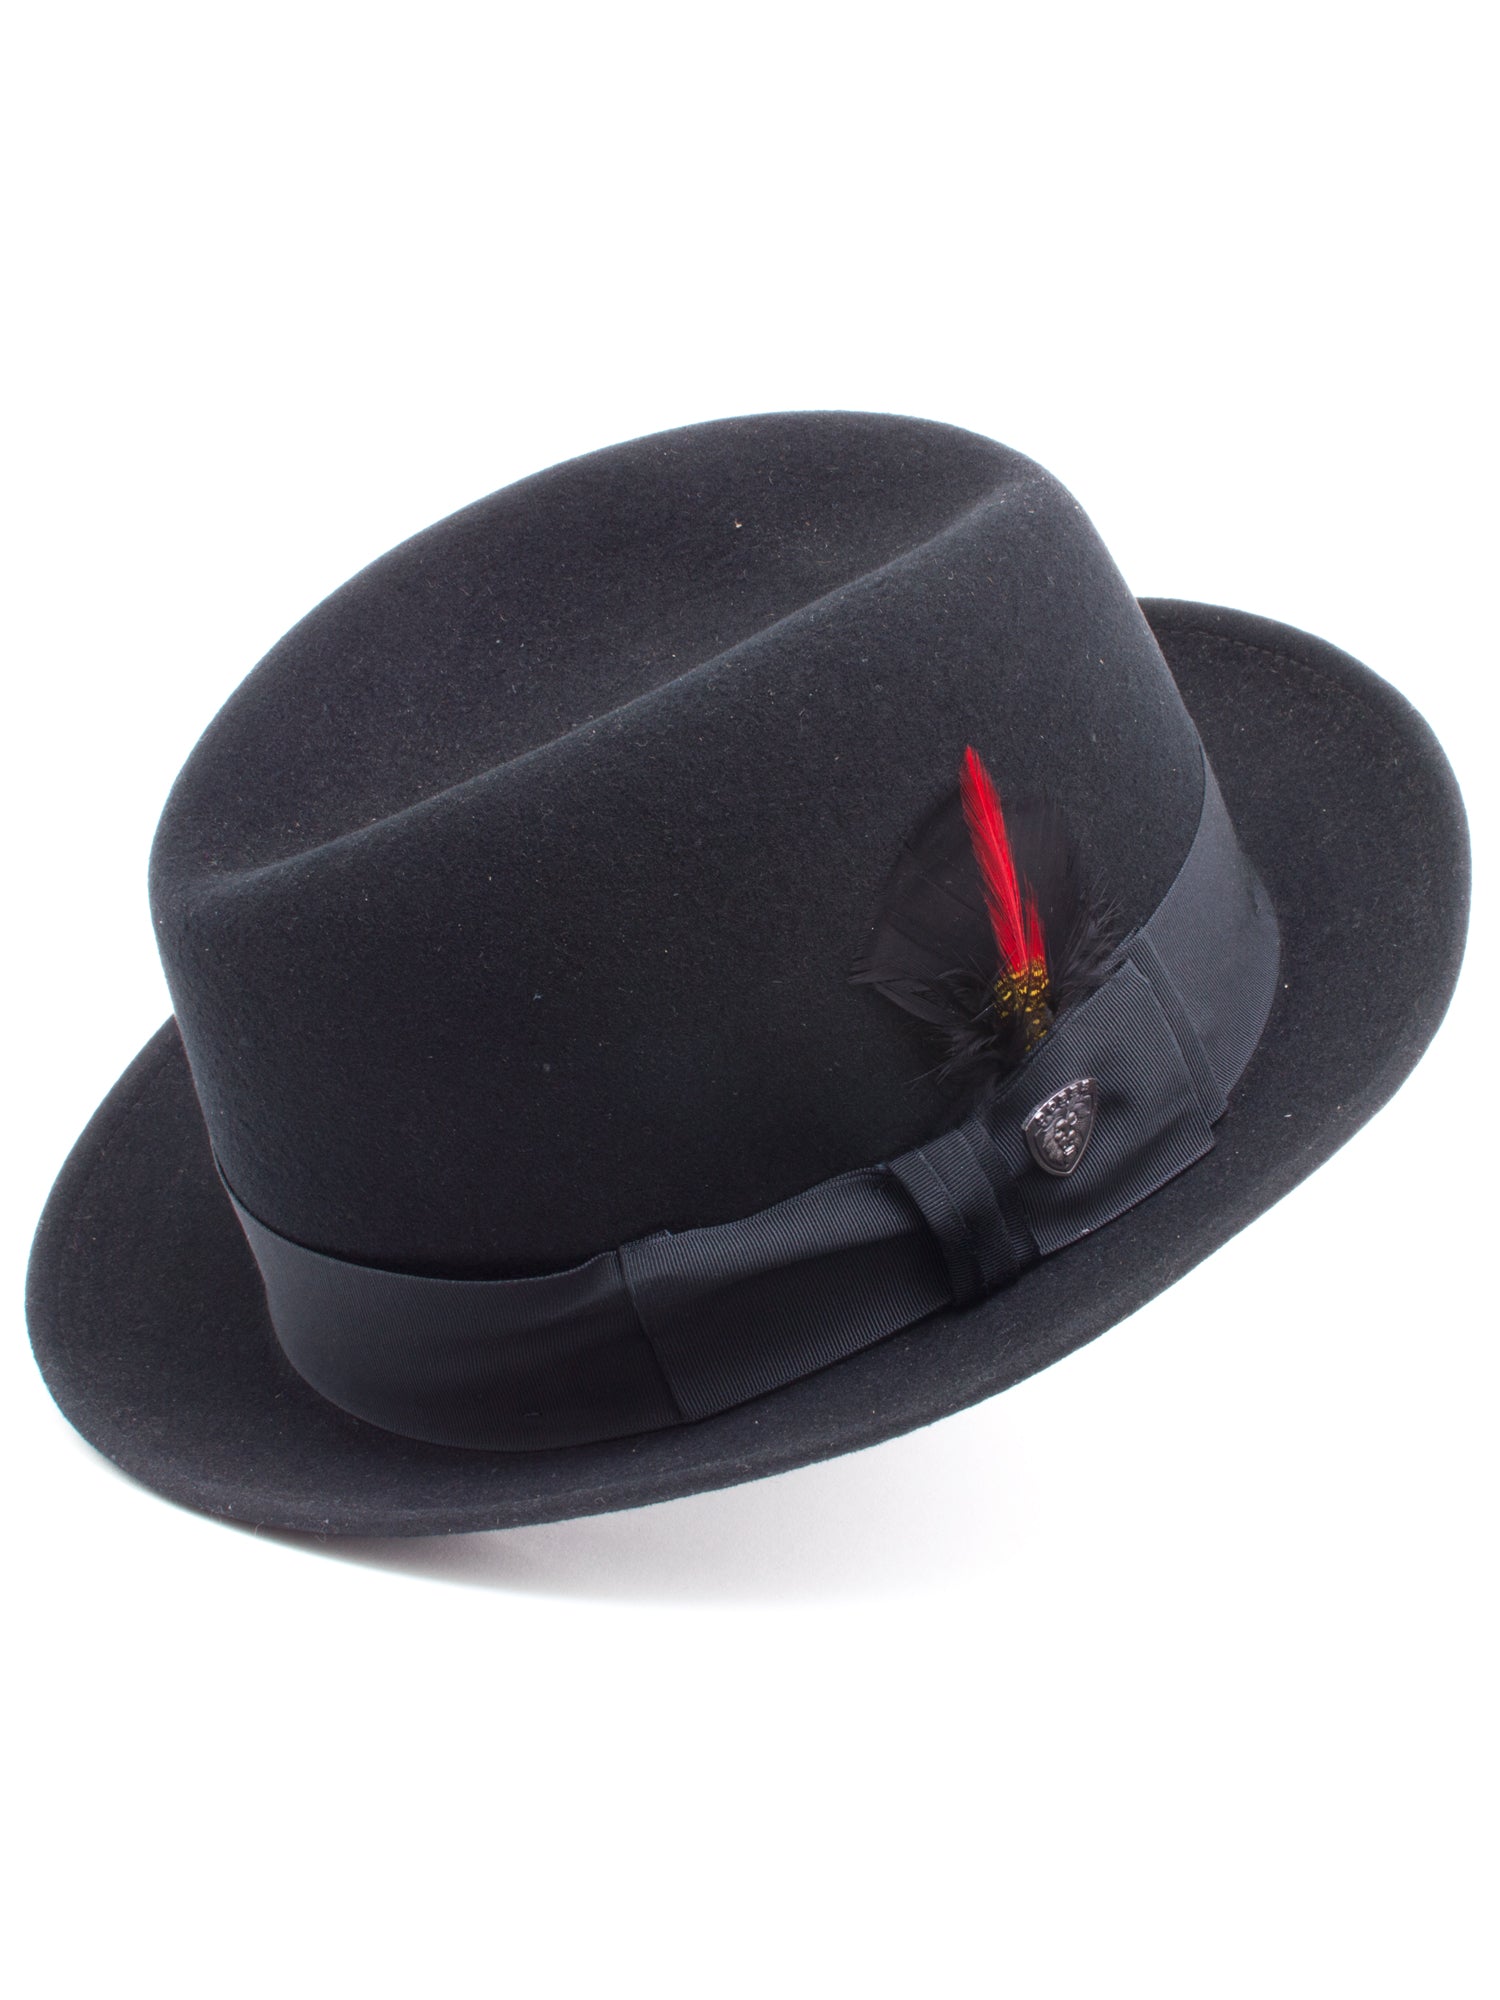 Dobbs 100% Wool Felt Men's Randall Hats in Black